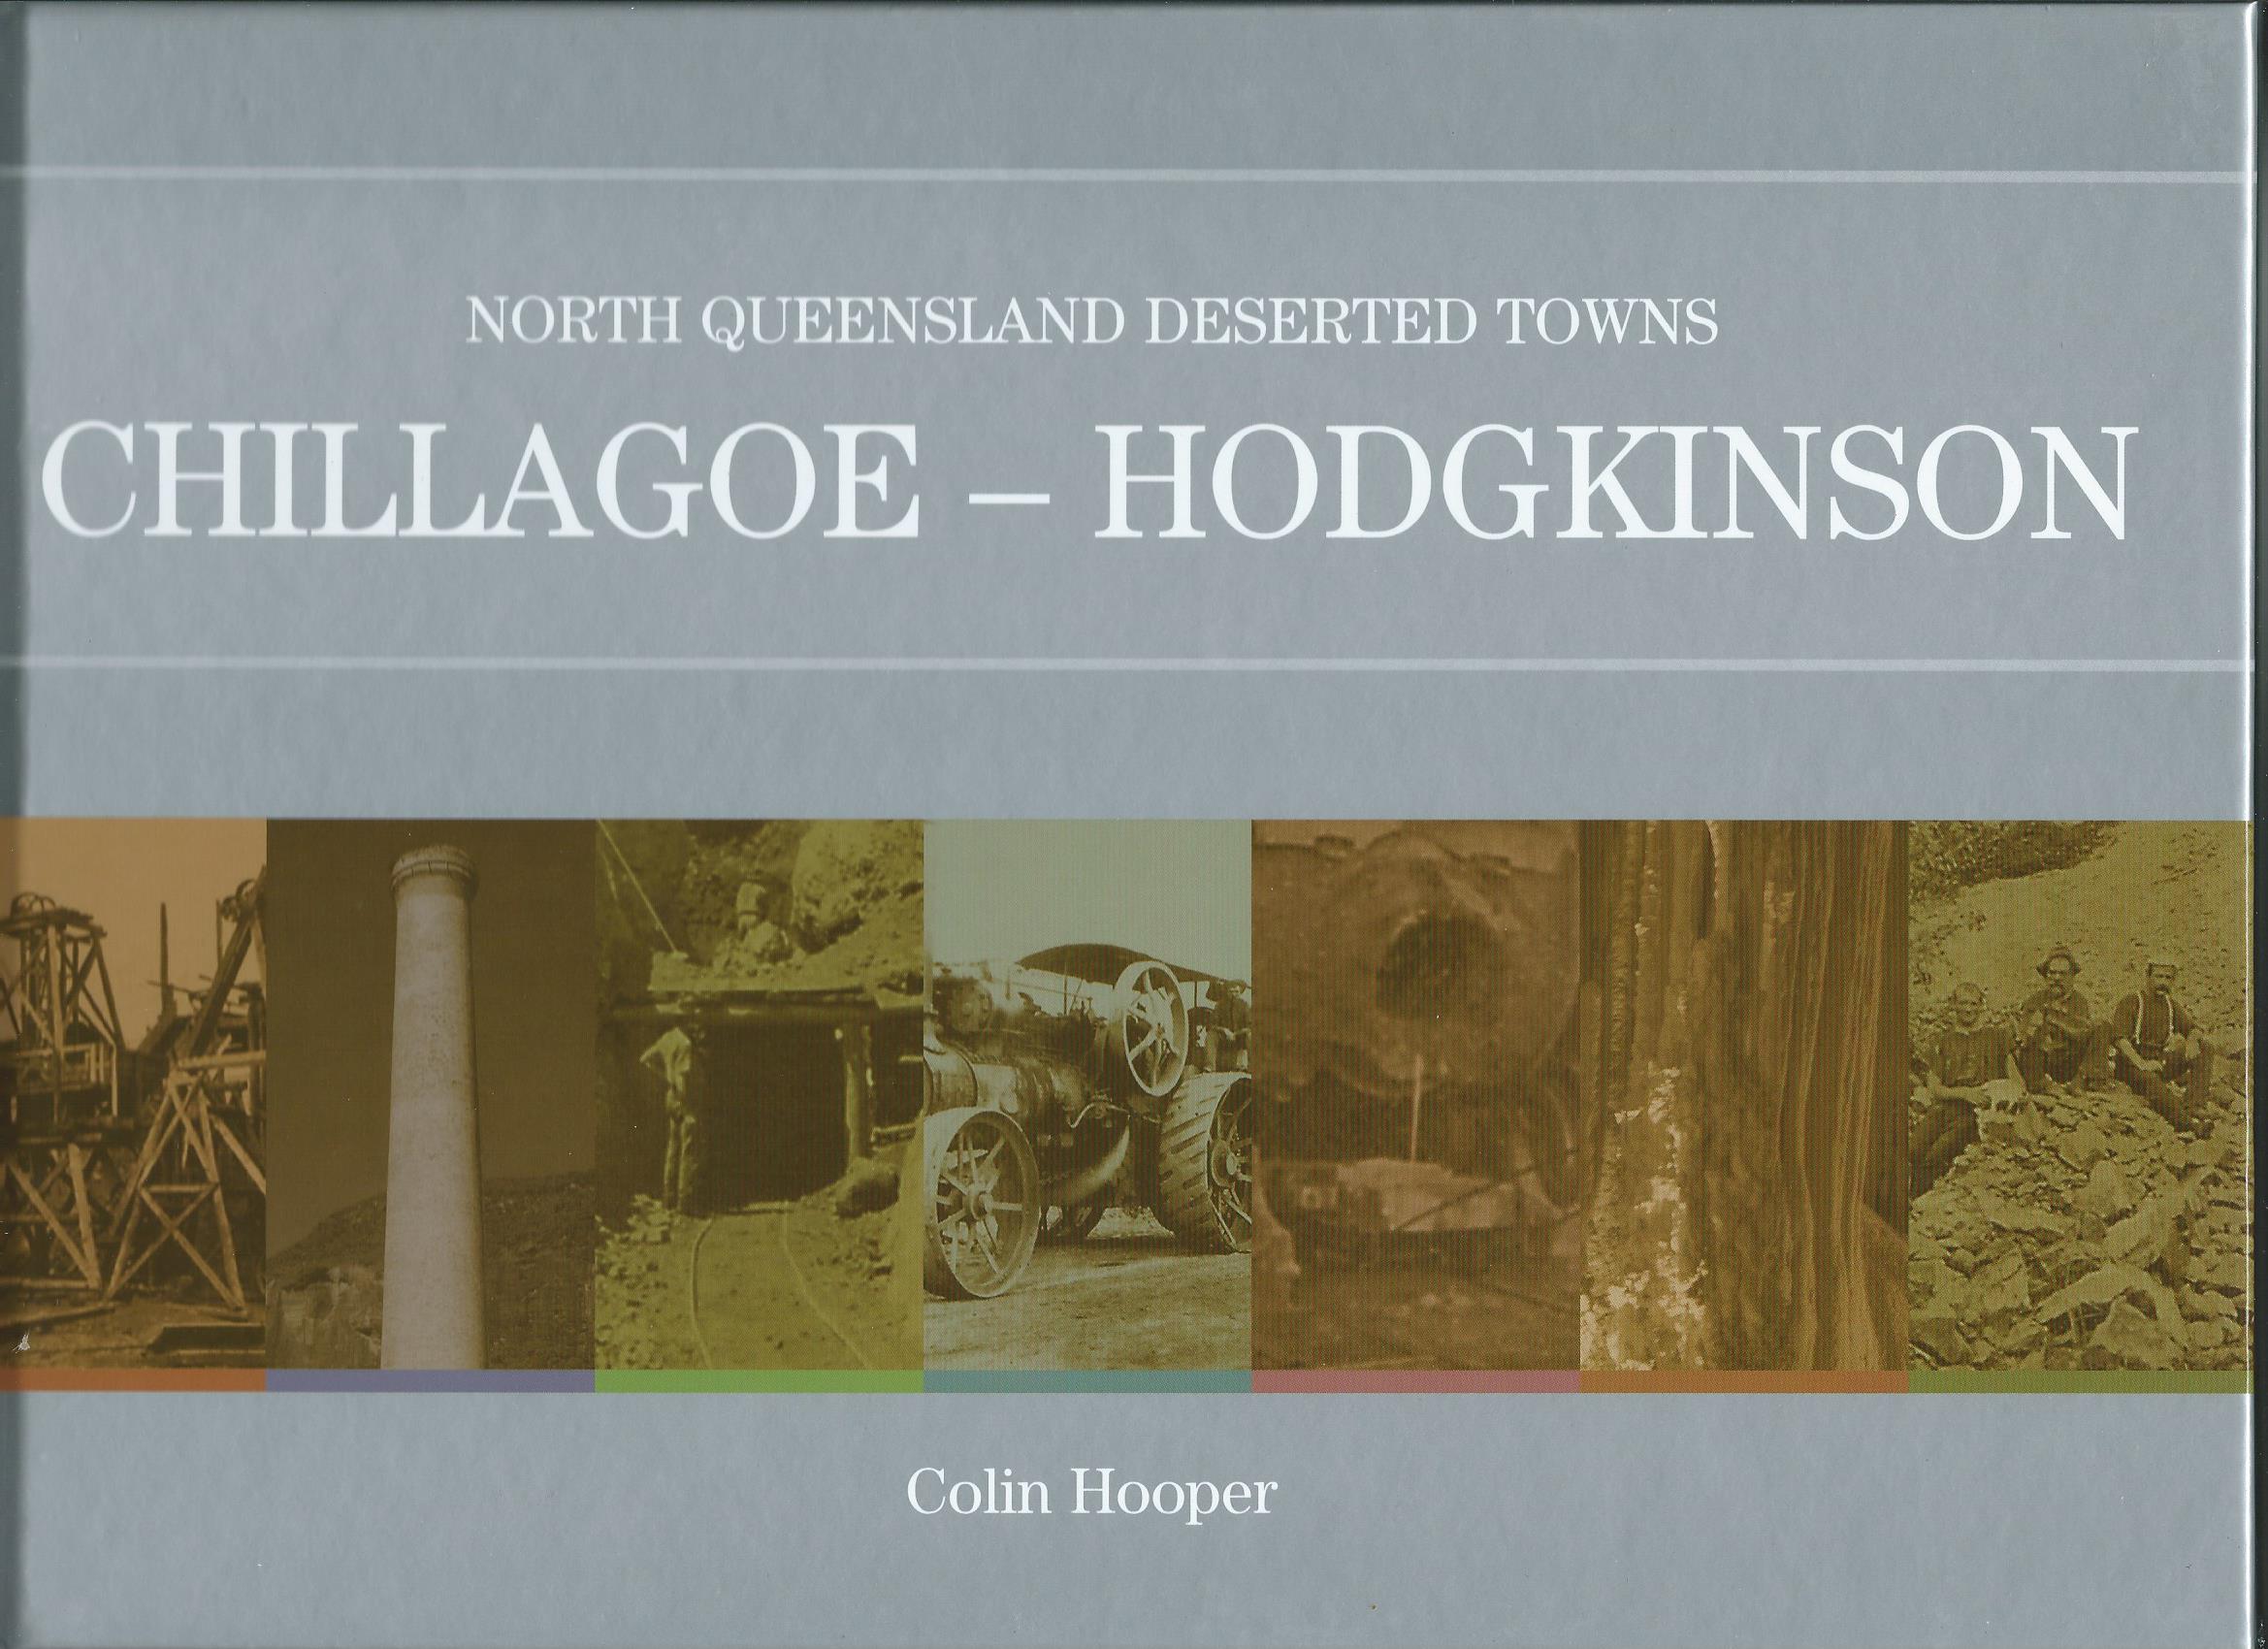 Chillagoe-Hodgkinson